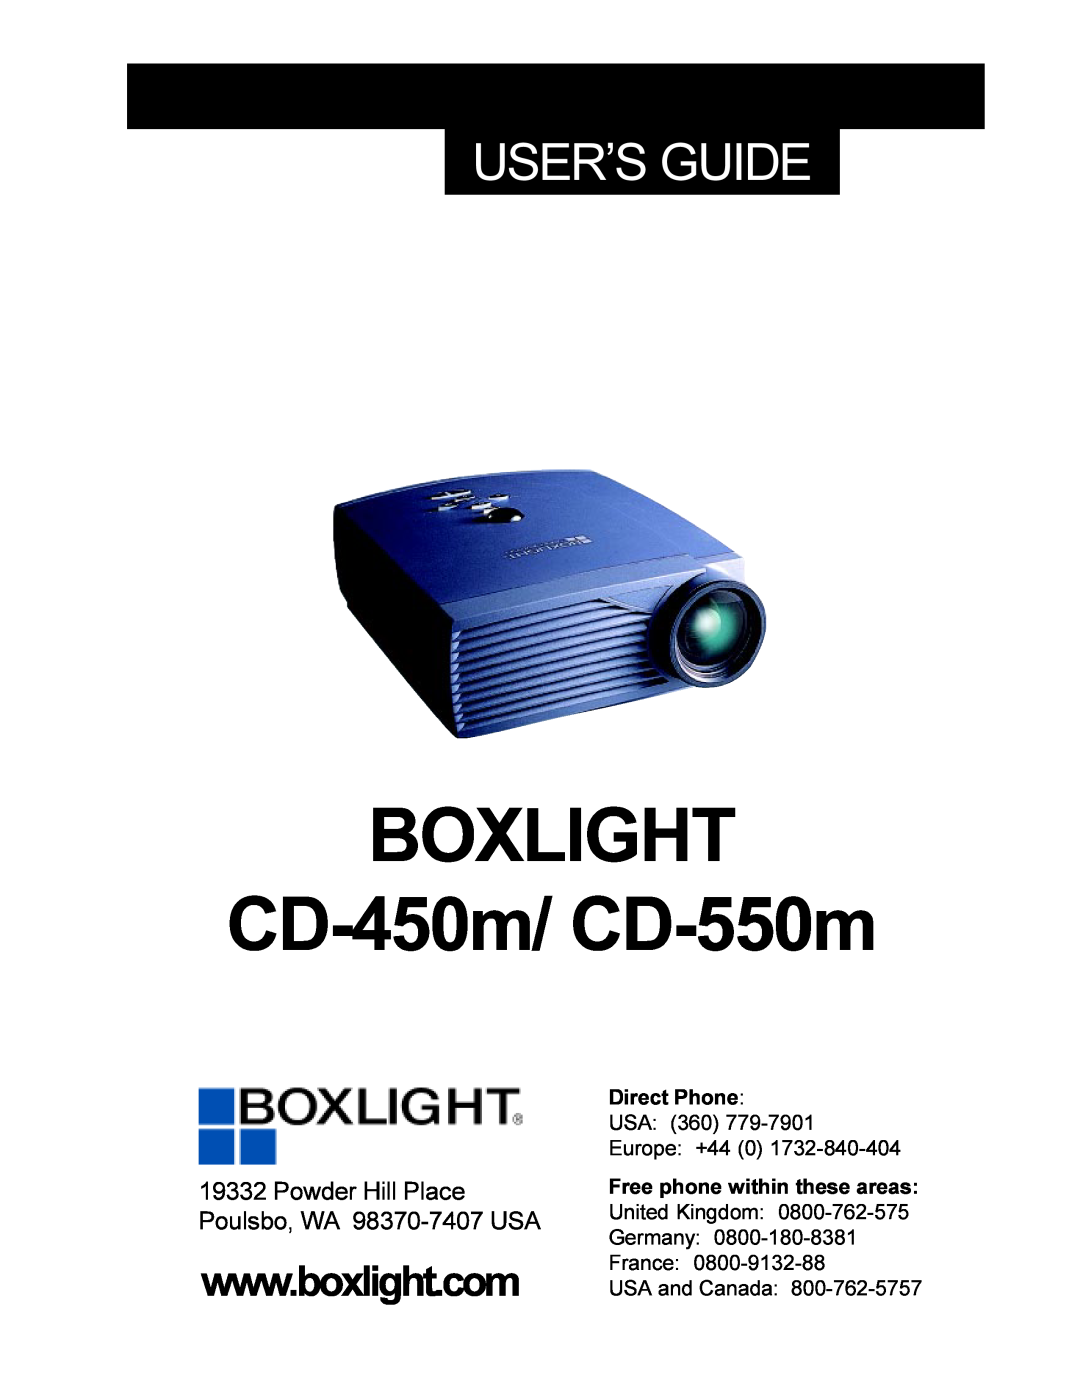 BOXLIGHT manual BOXLIGHT CD-450m/ CD-550m, User’S Guide, Powder Hill Place Poulsbo, WA 98370-7407 USA, Direct Phone 